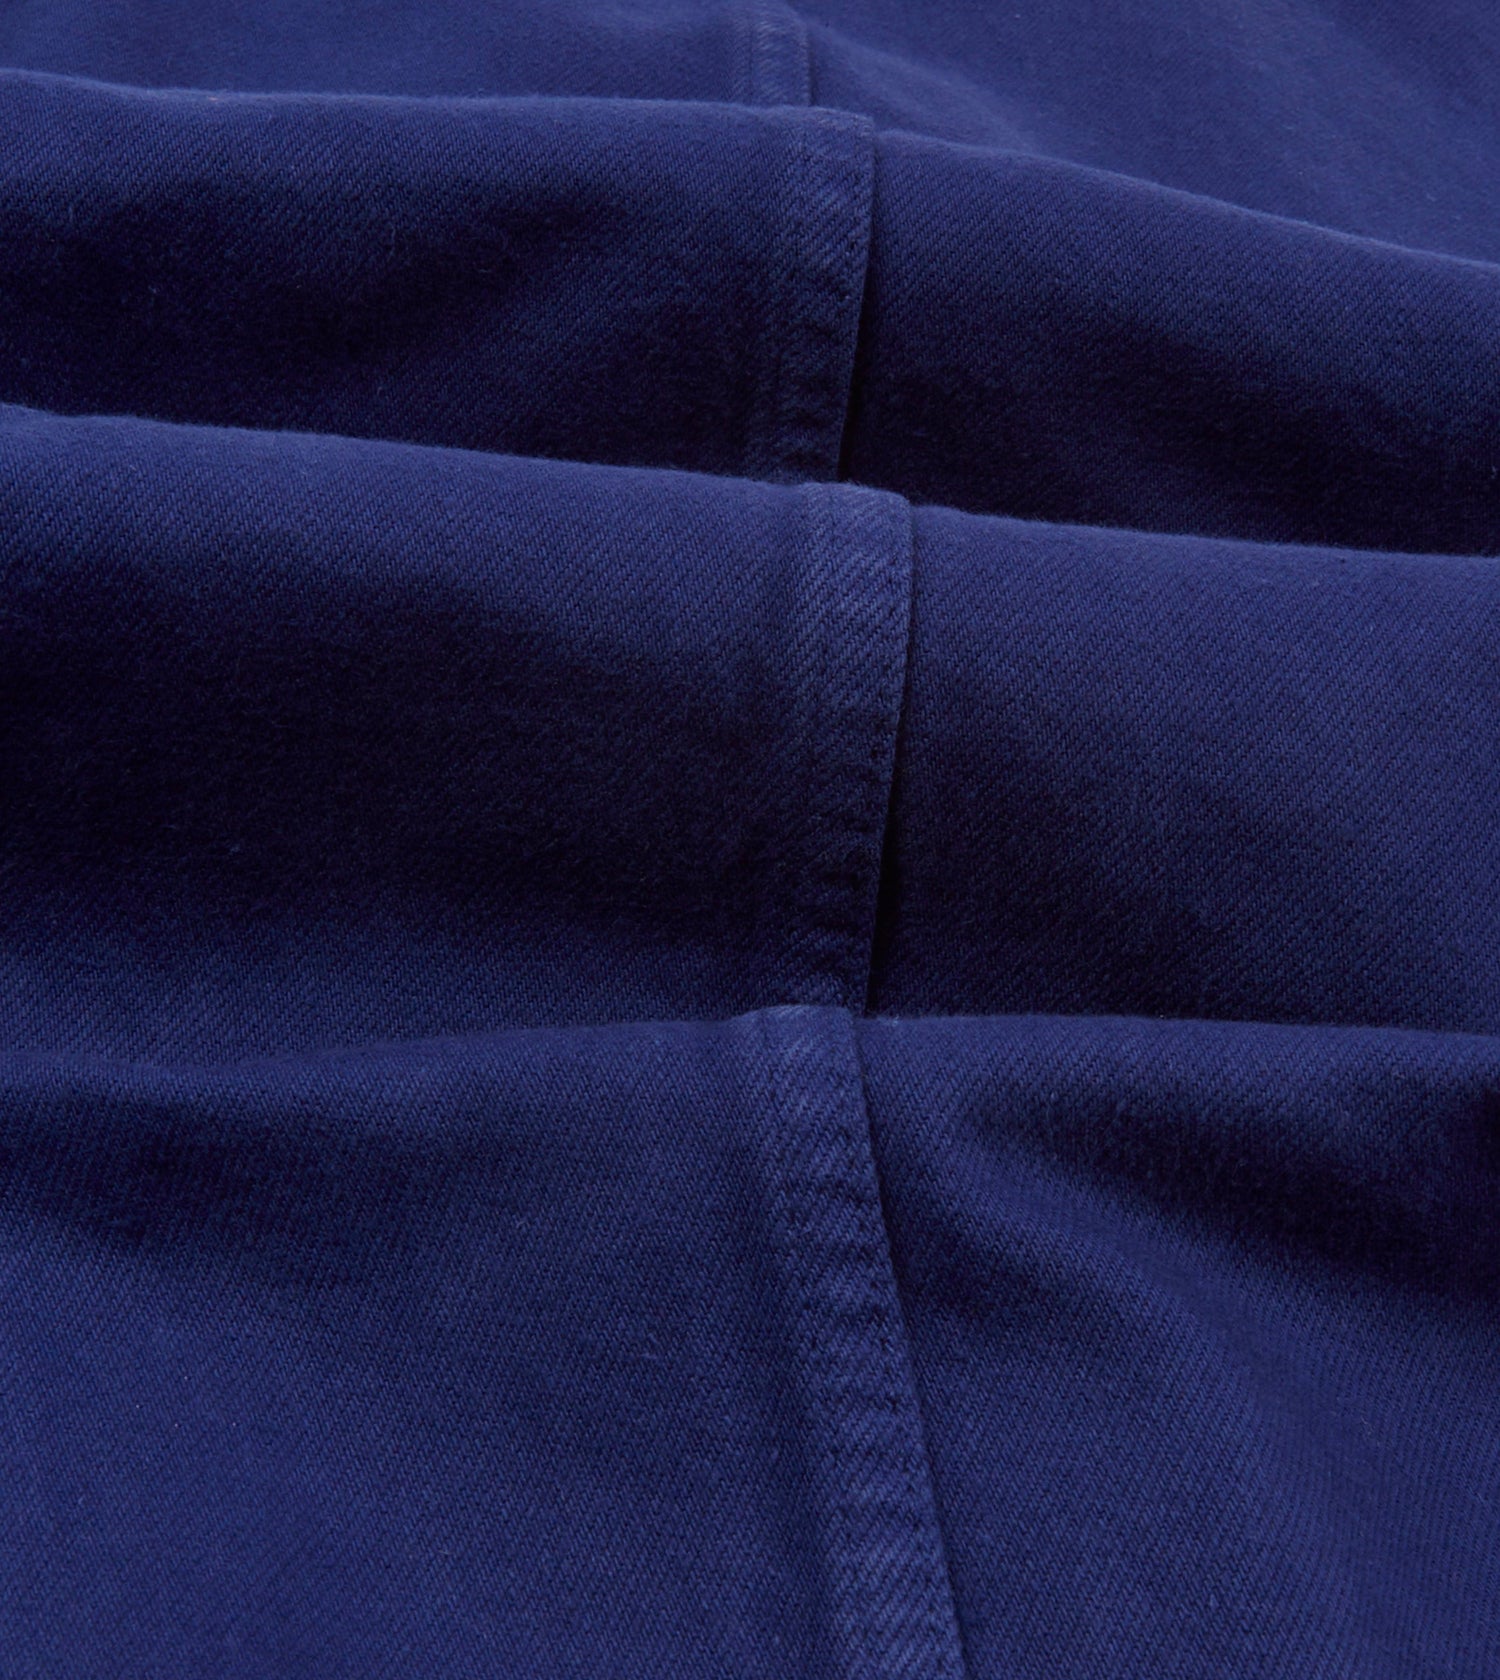 French Blue Cotton Twill Five-Pocket Artist Chore Jacket